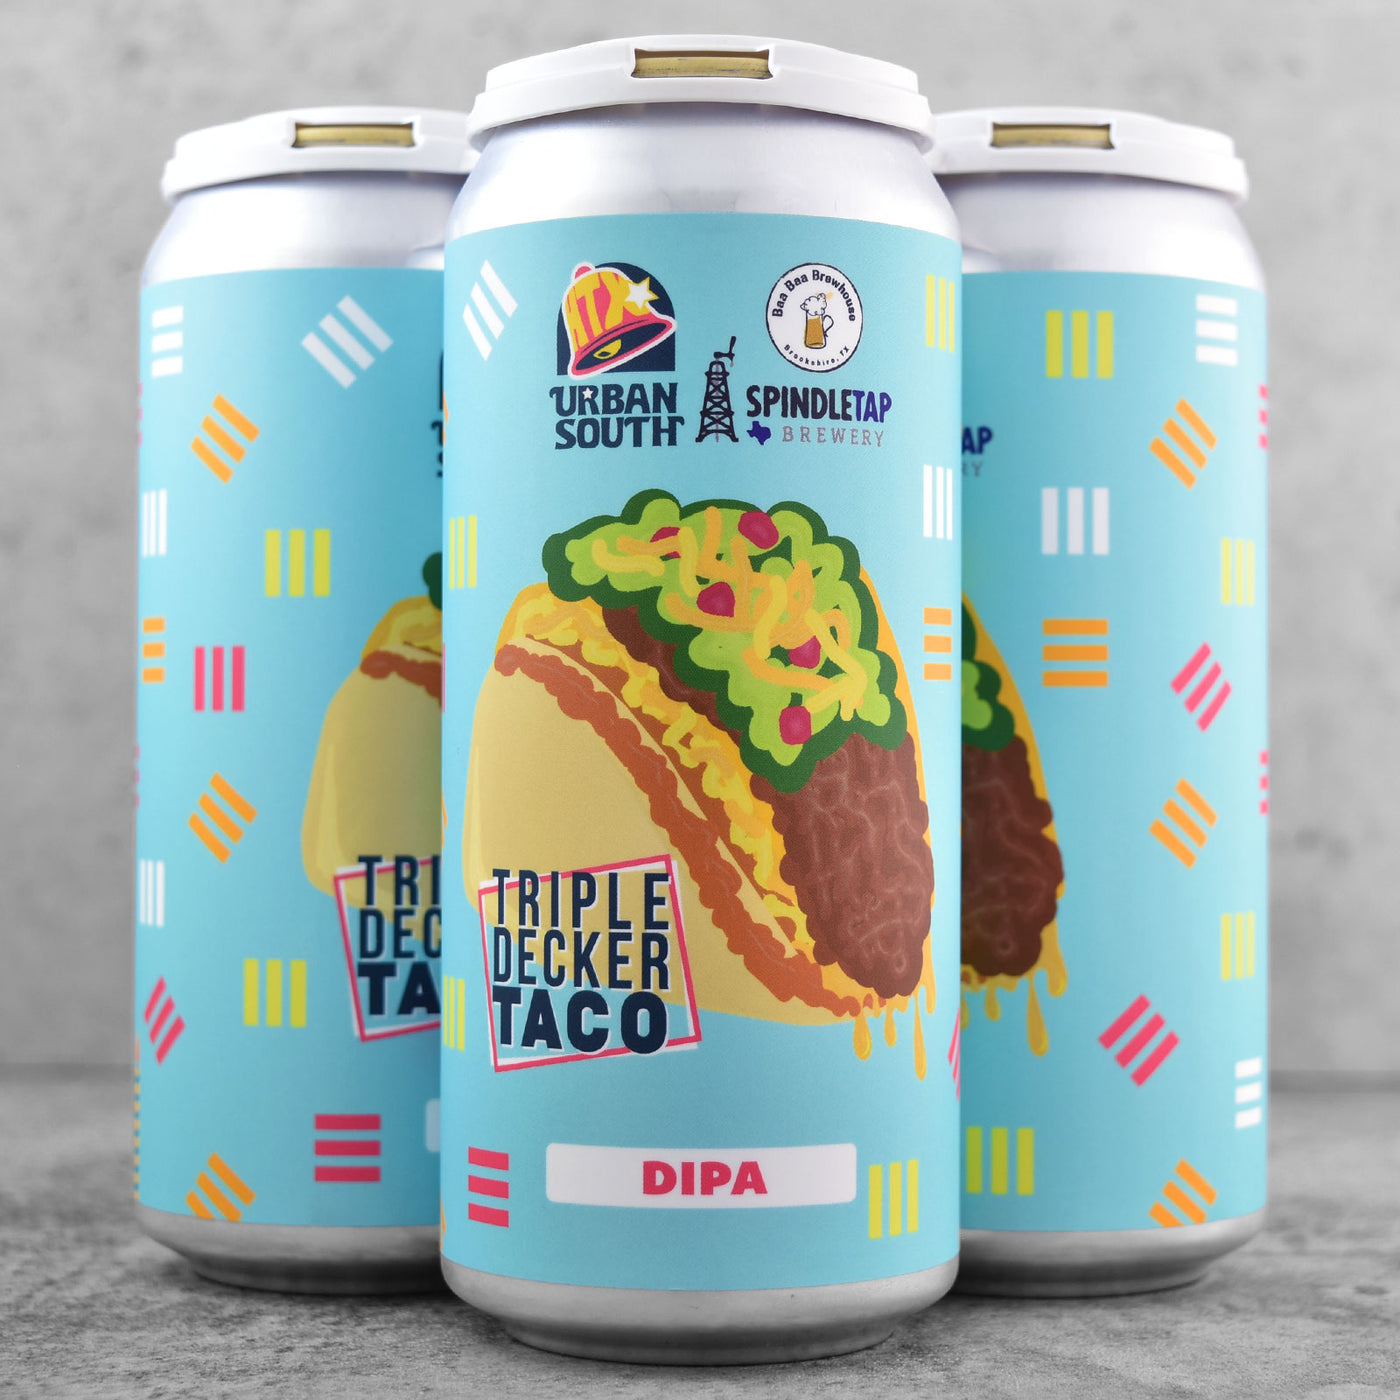 Urban South / Baa Baa Brewhouse / SpindleTap - Triple Decker Taco